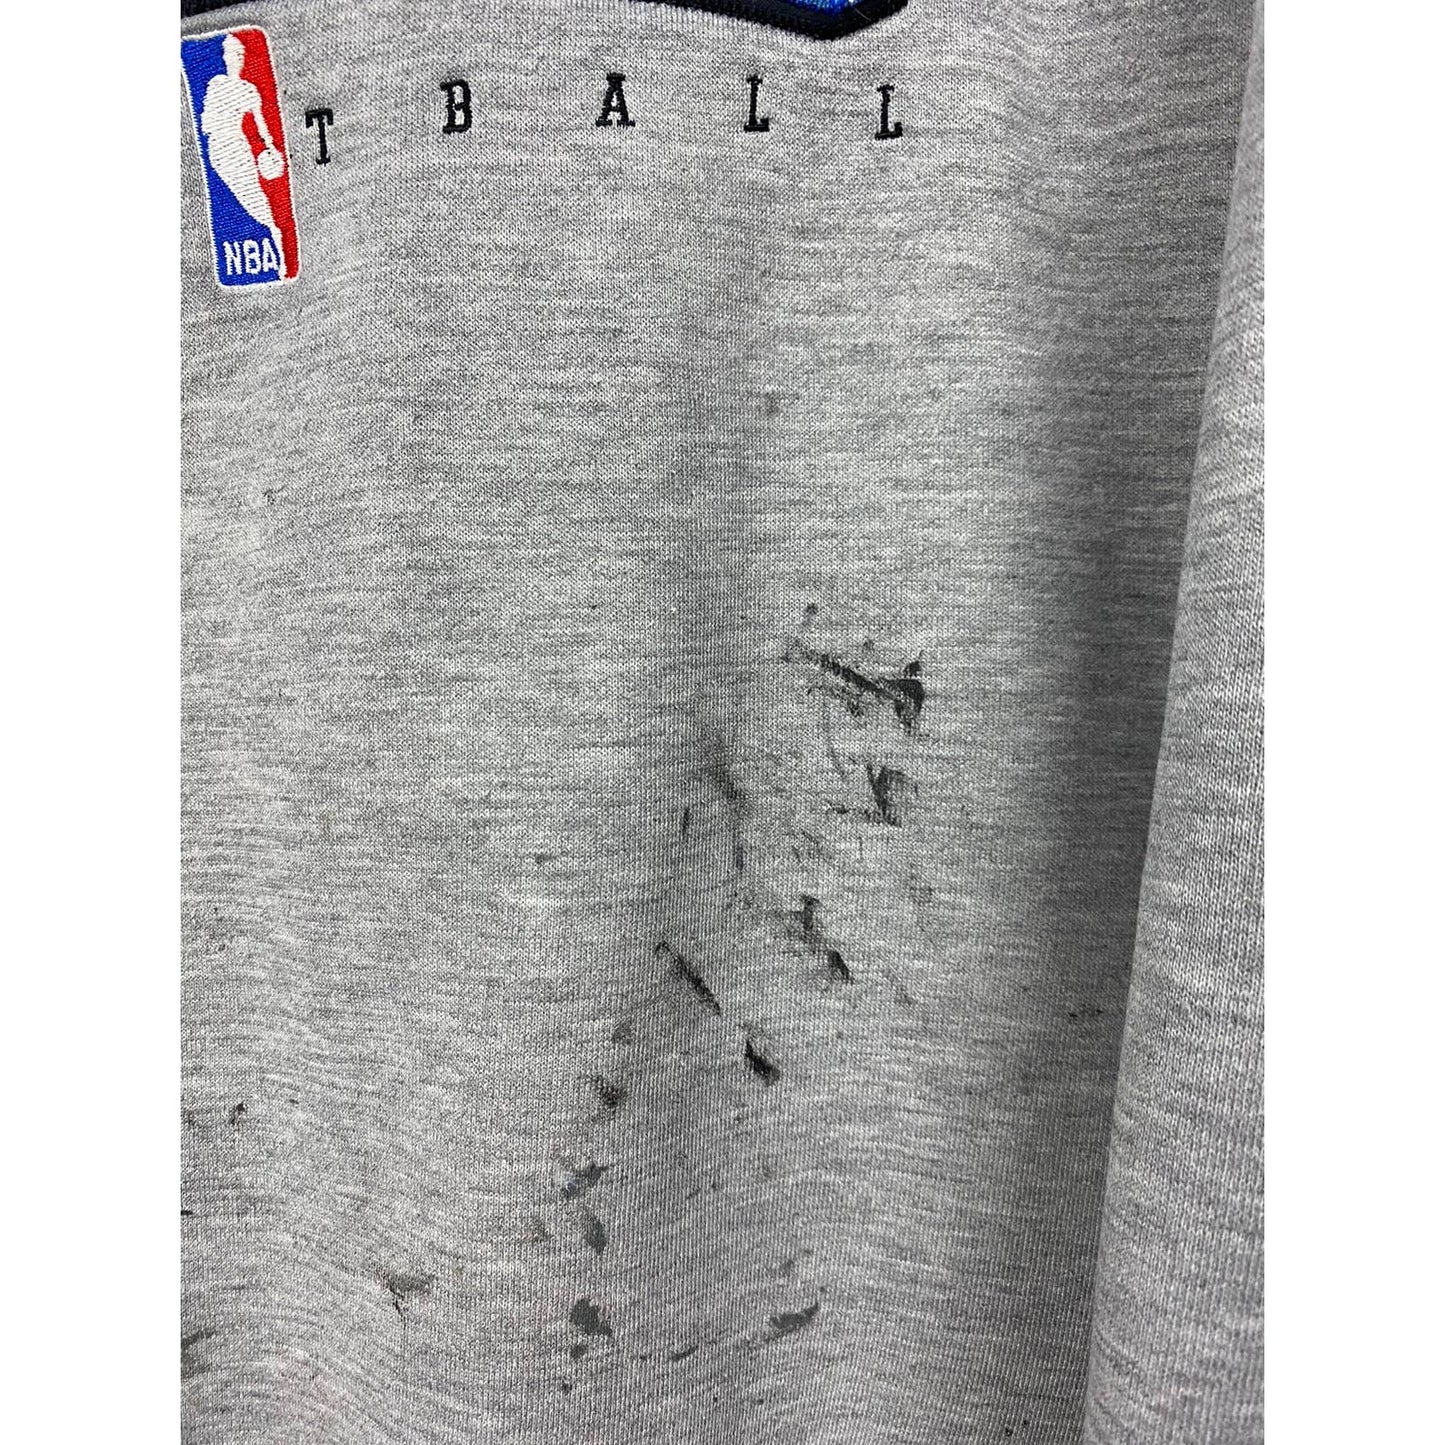 New York Knicks vintage Puma grey sweatshirt NBA thrashed